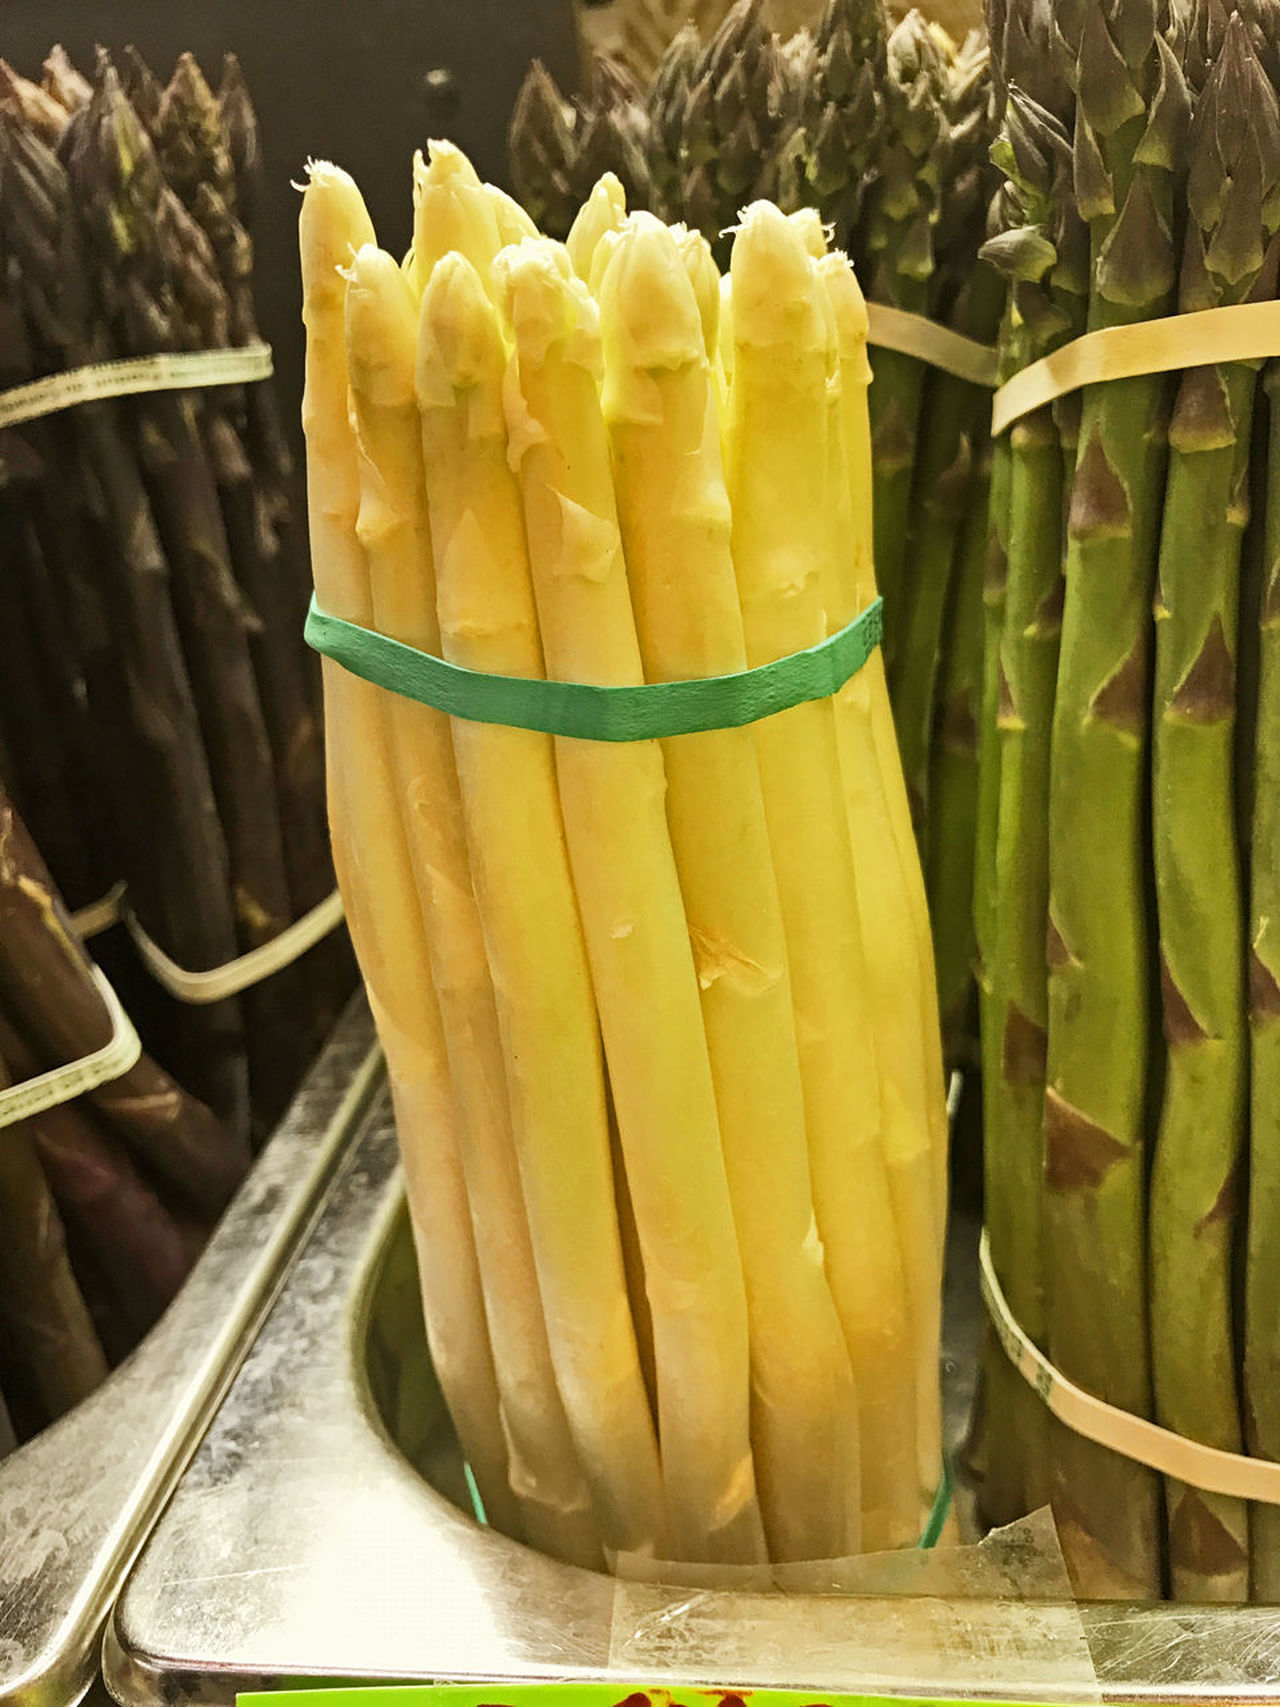 Yellow asparagus